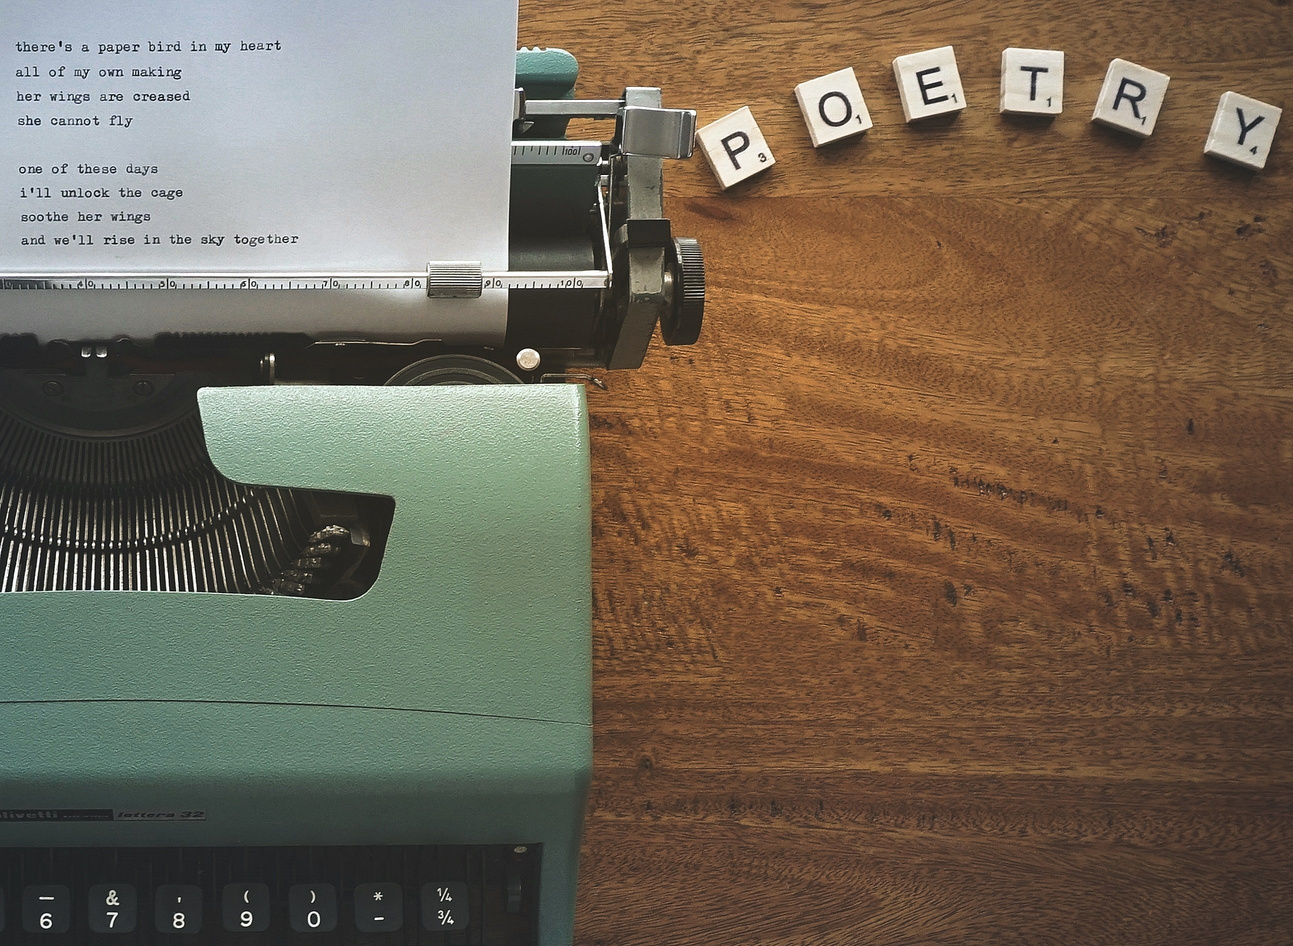 Scrabble Tiles Near a Typewriter